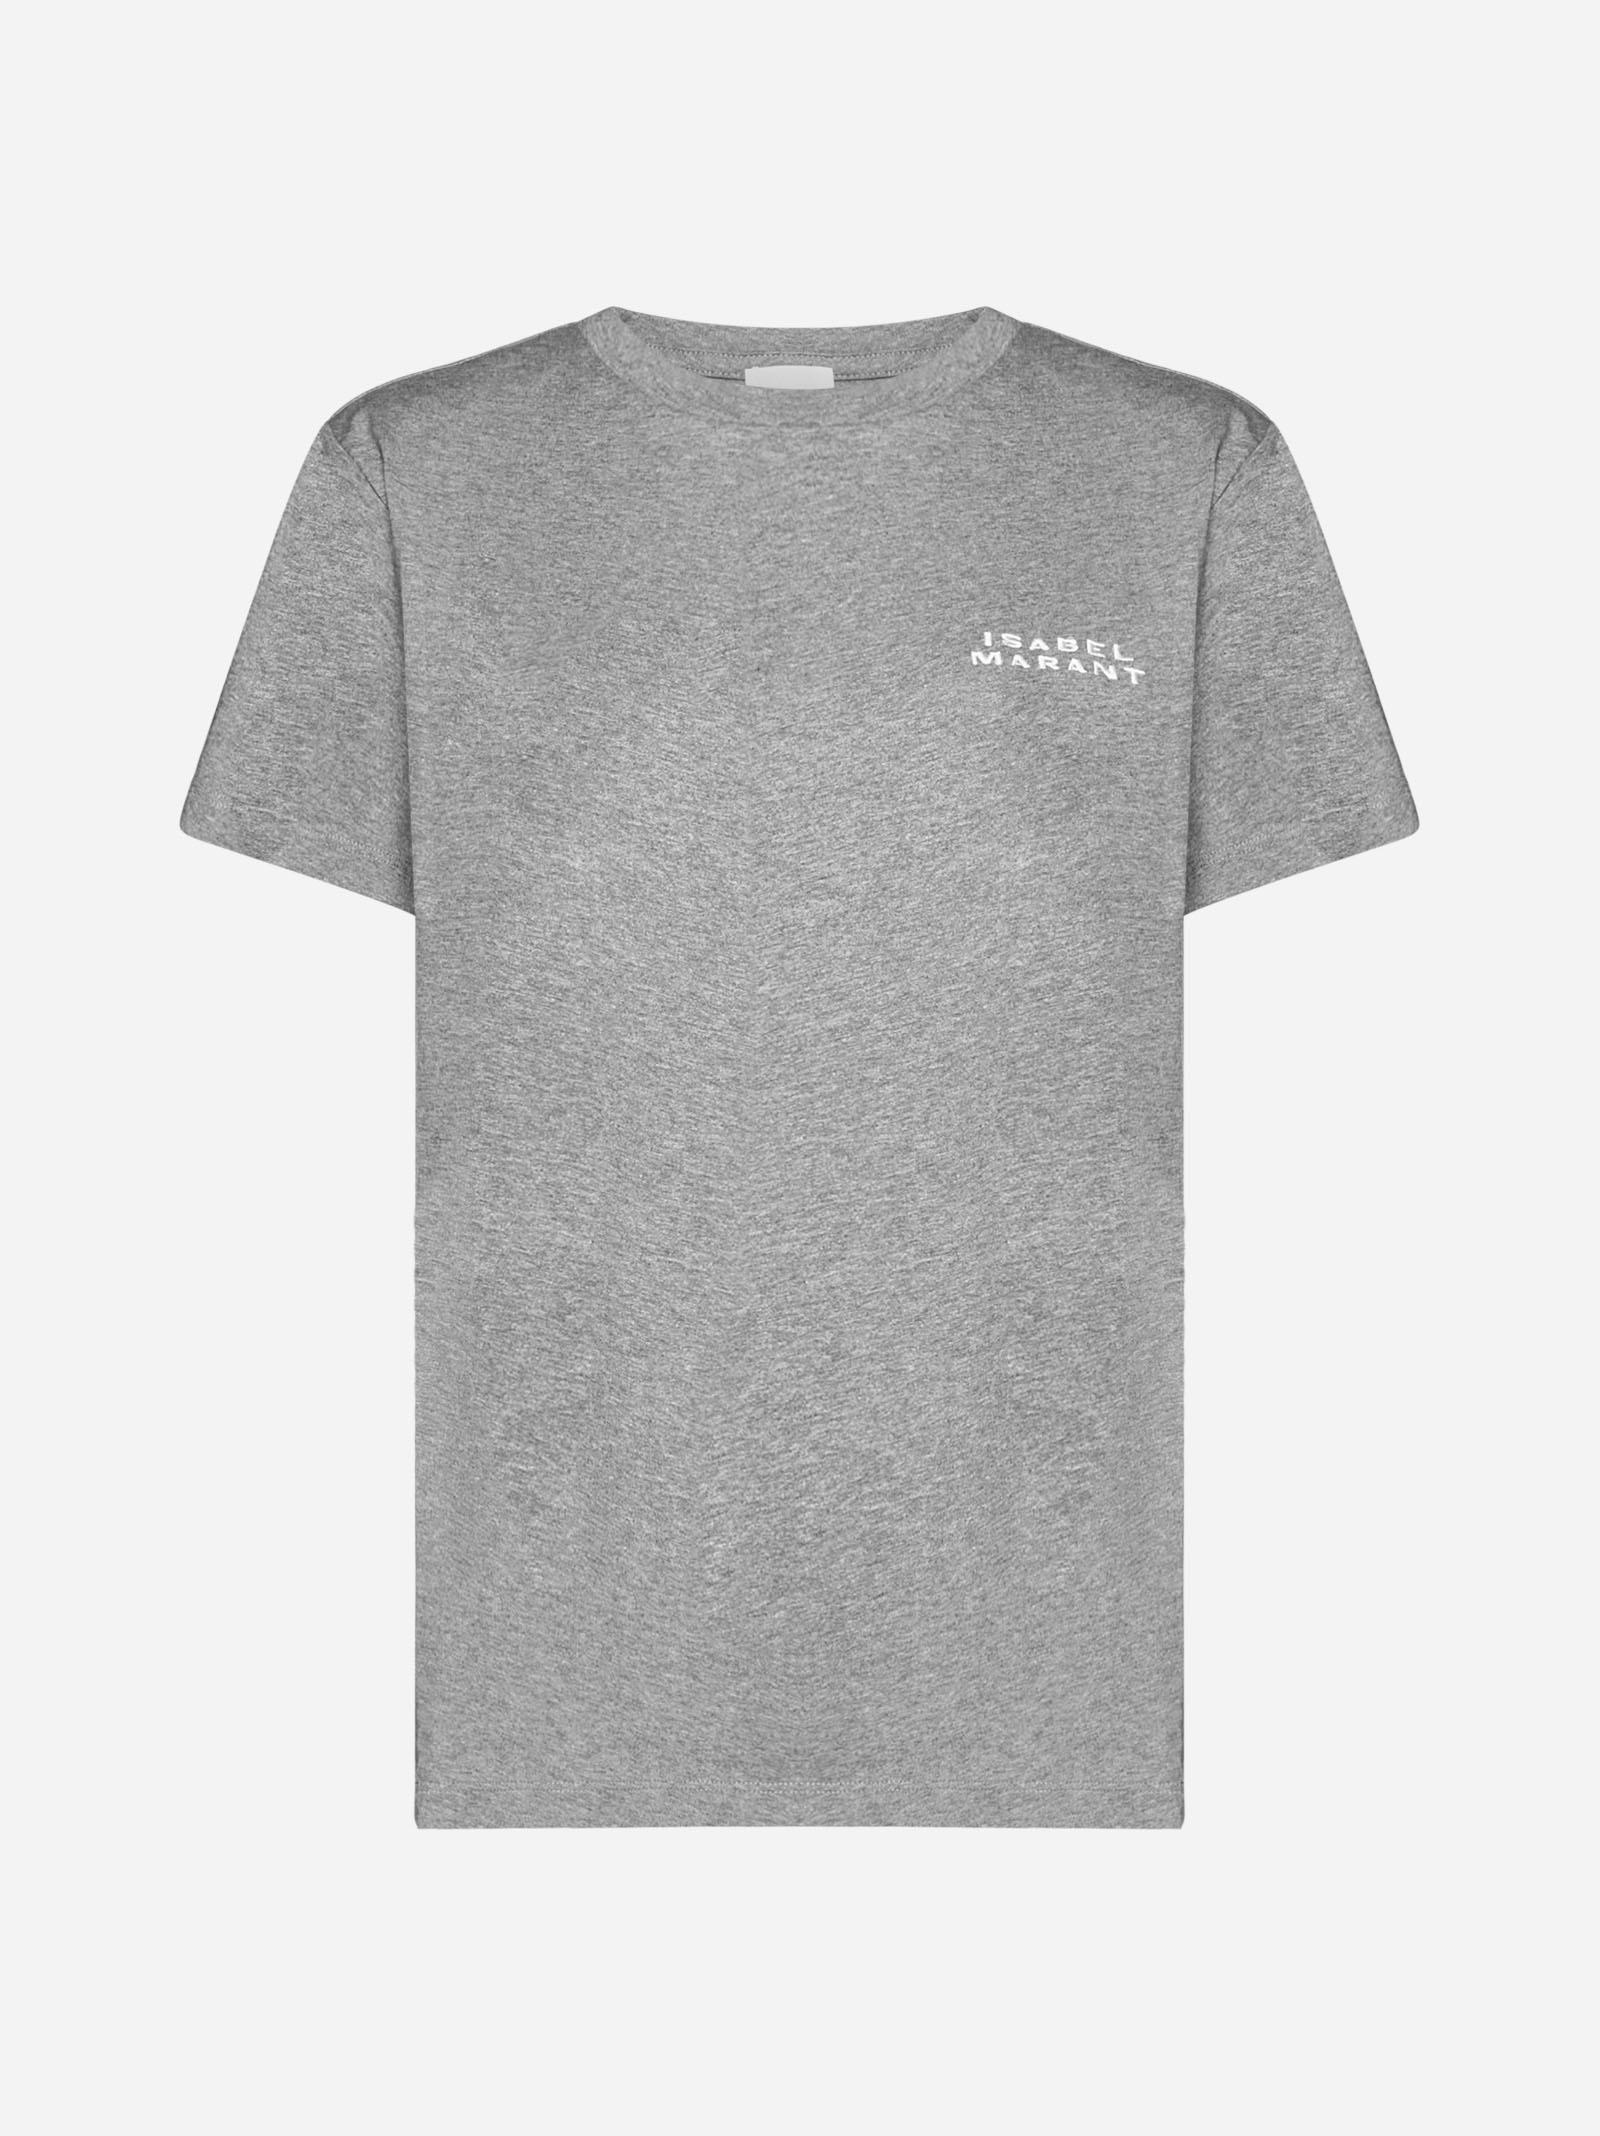 Isabel Marant Vidal Cotton T-shirt in Gray | Lyst